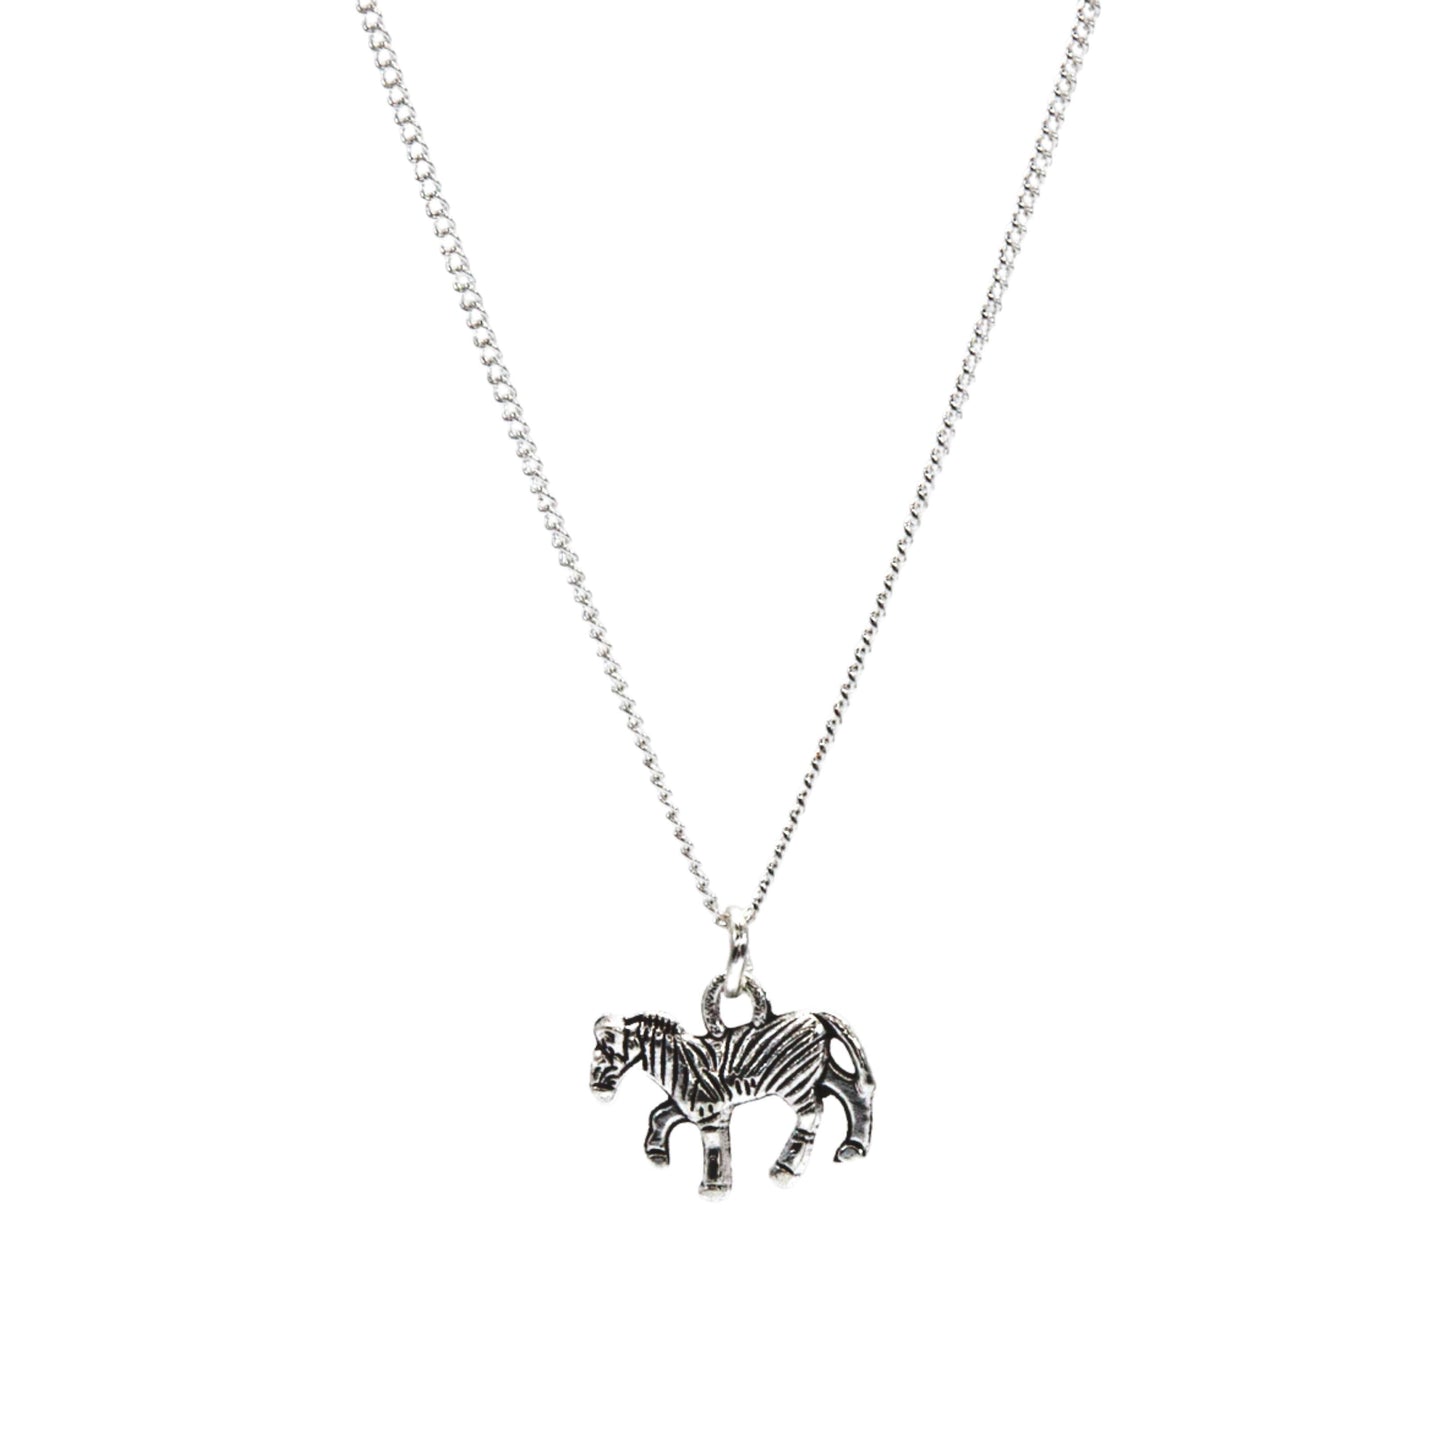 Silver Zebra Necklace - Adjustable Length